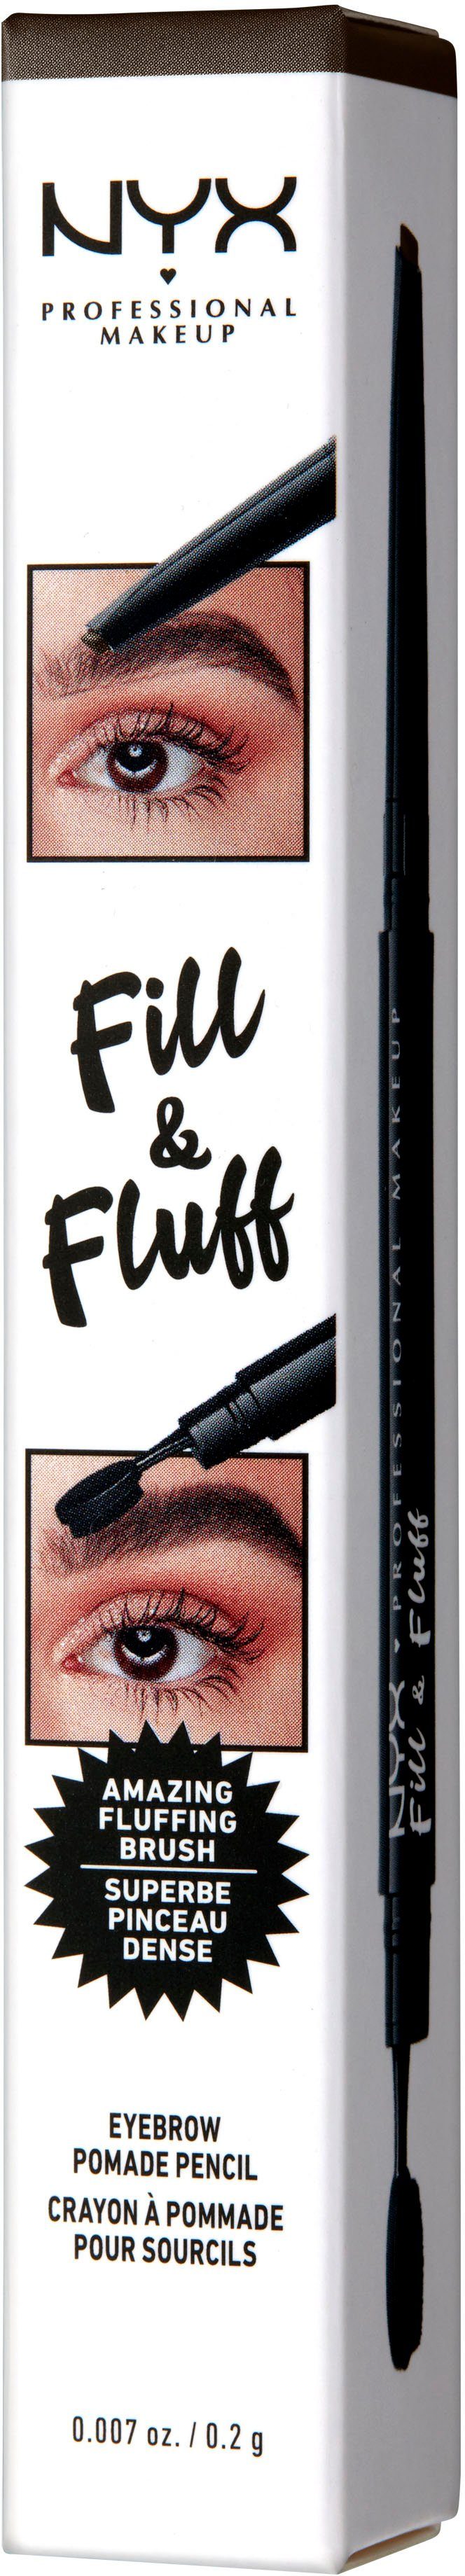 NYX Augenbrauen-Stift Professional Makeup Eyebrow Fill Fluff & espresso Pencil Pomade